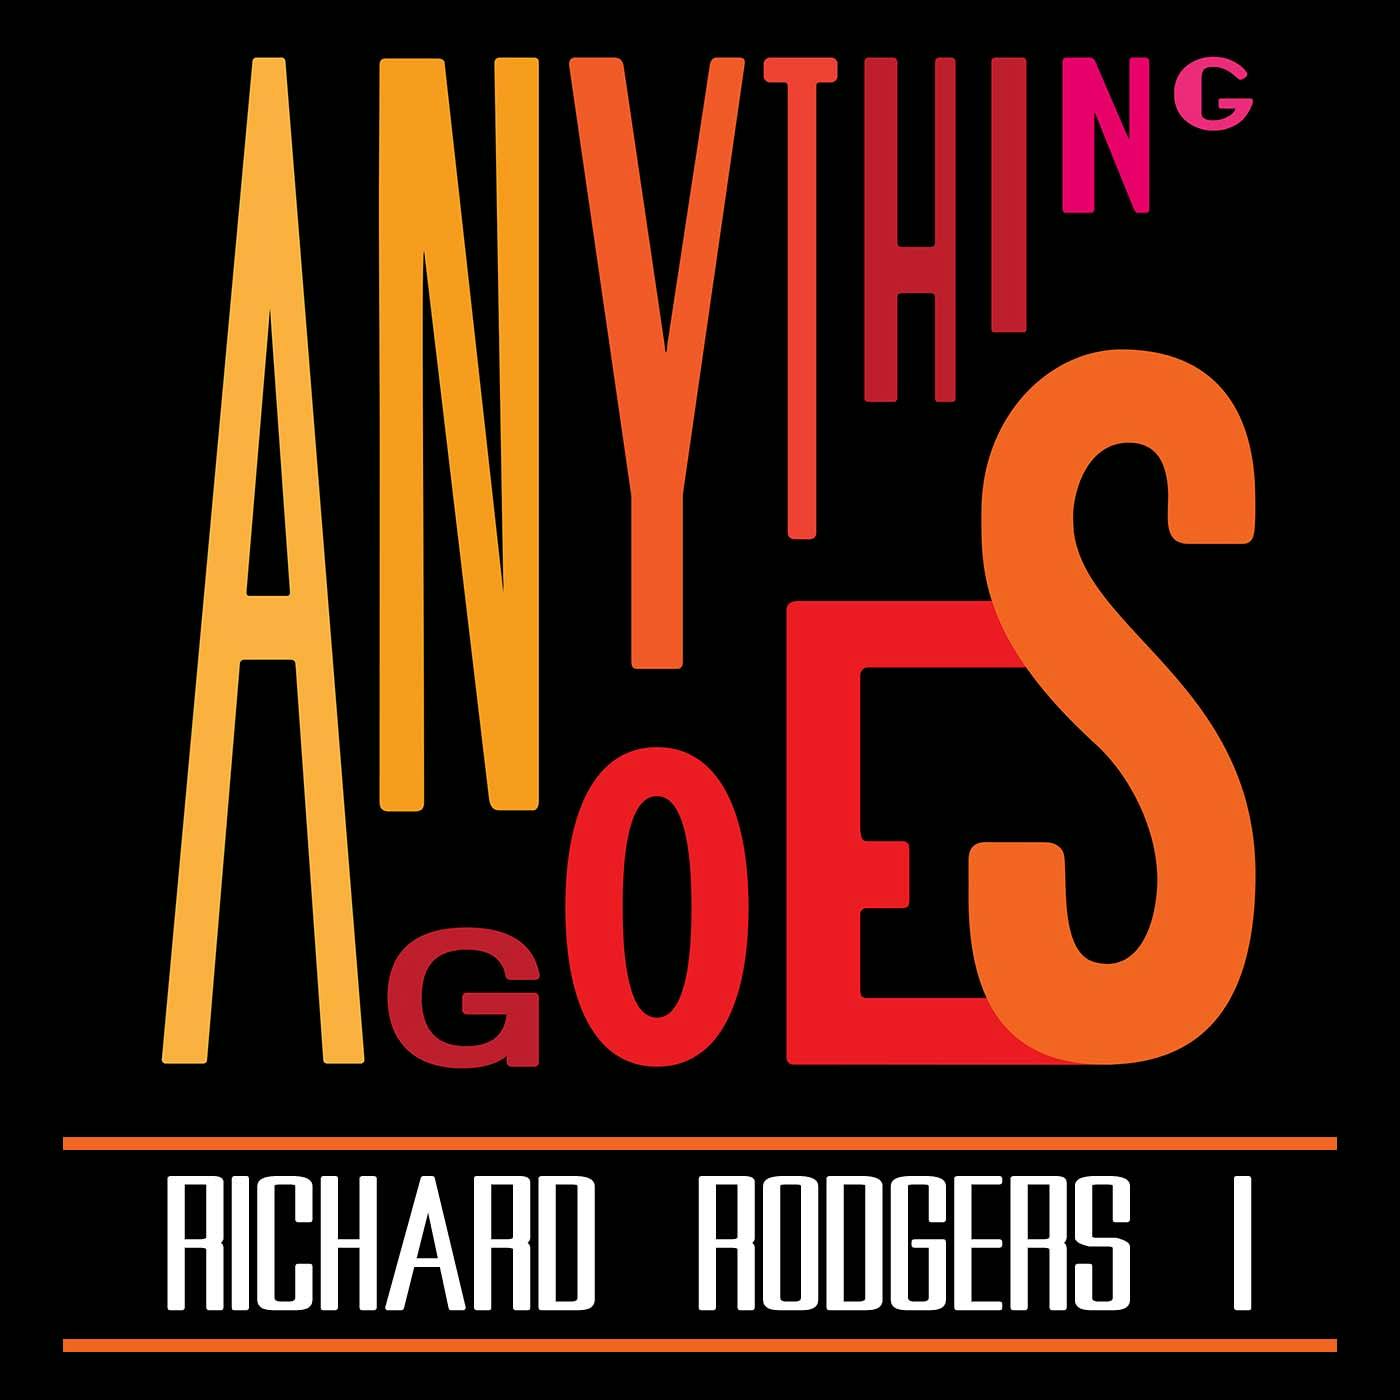 91 Richard Rodgers I